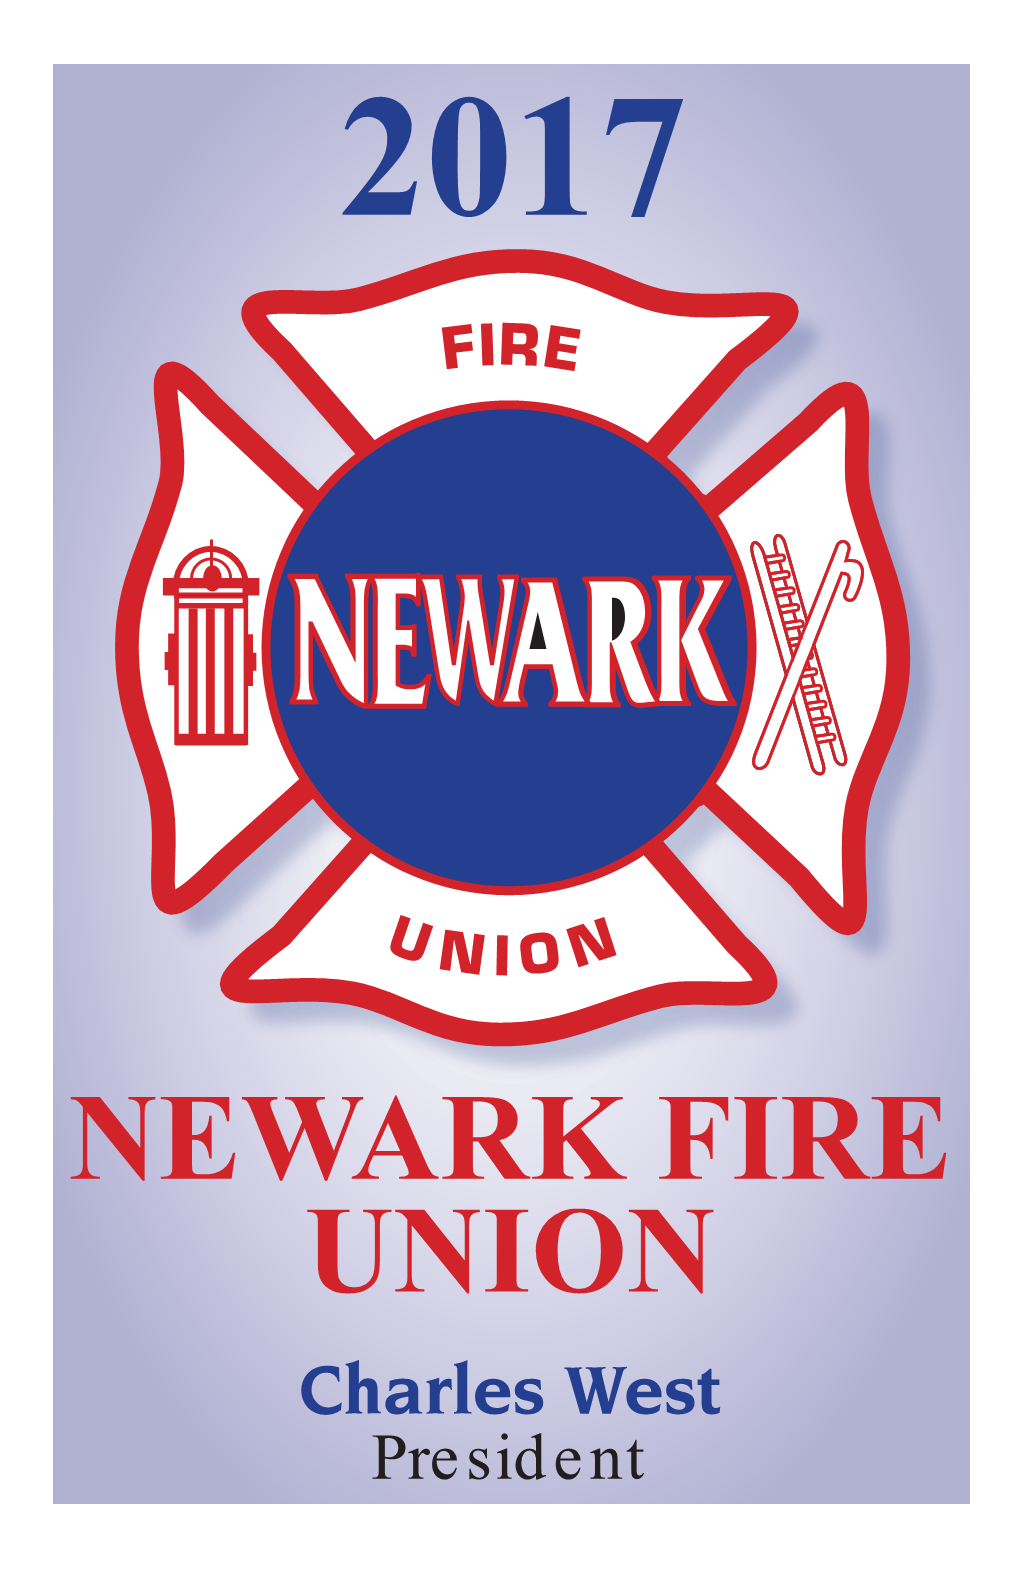 NEWARK FIRE UNION Charles West President